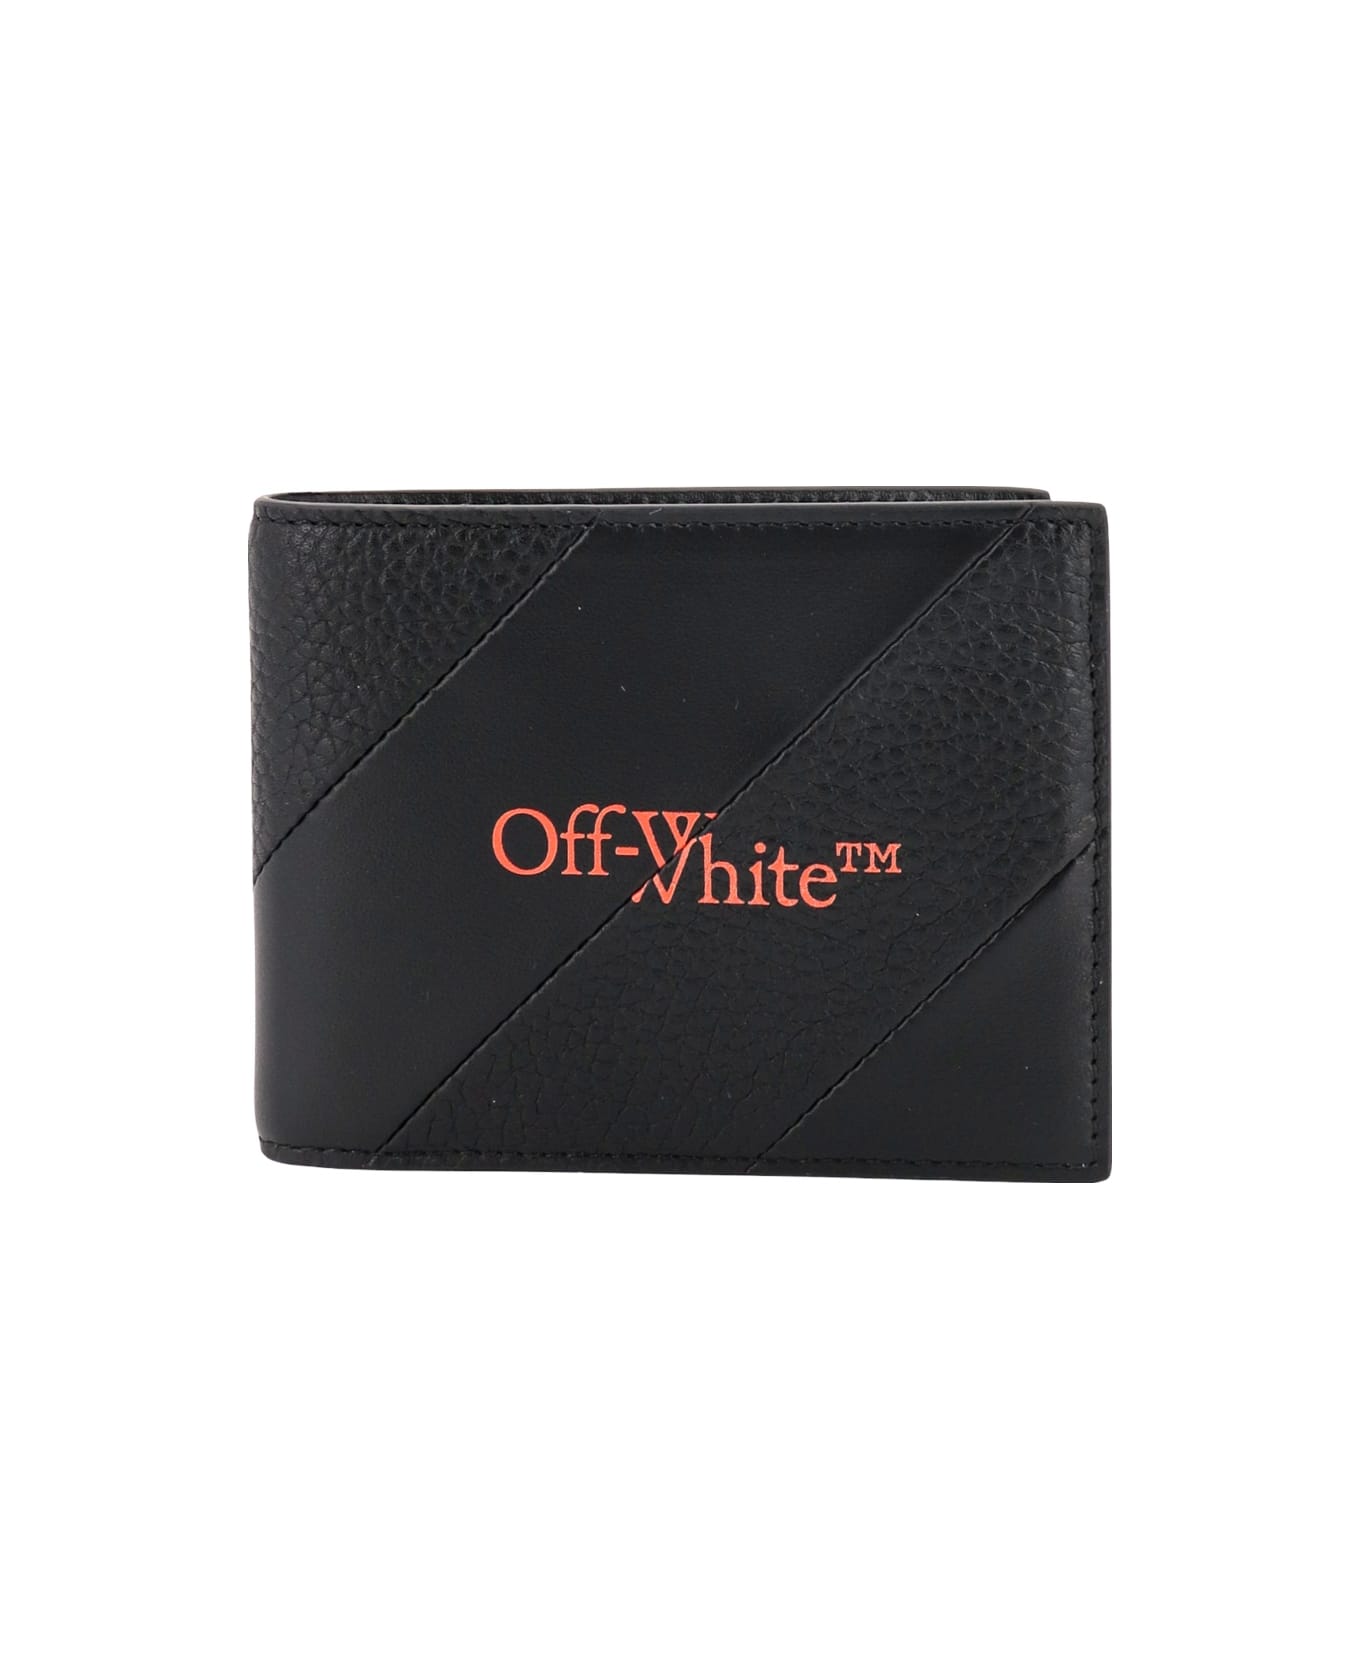 Off-White Wallet - Black